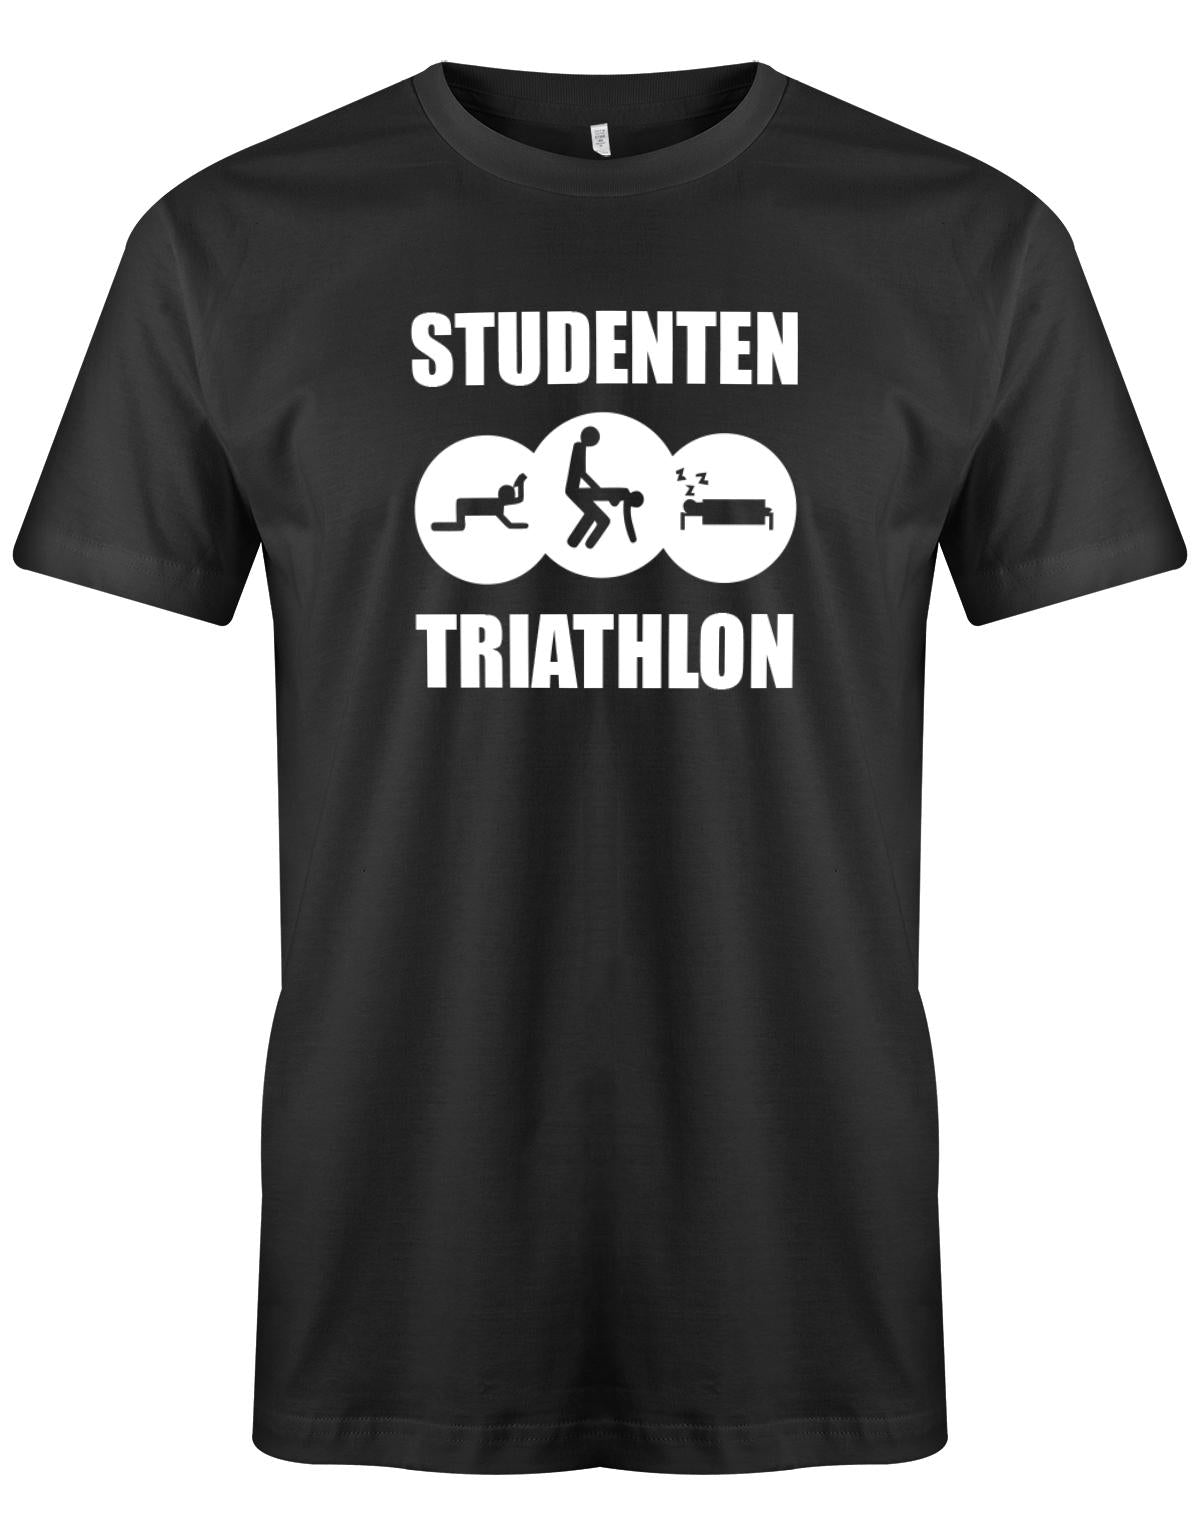 Studenten-Triahtlon-Herren-Shirt-SChwarz